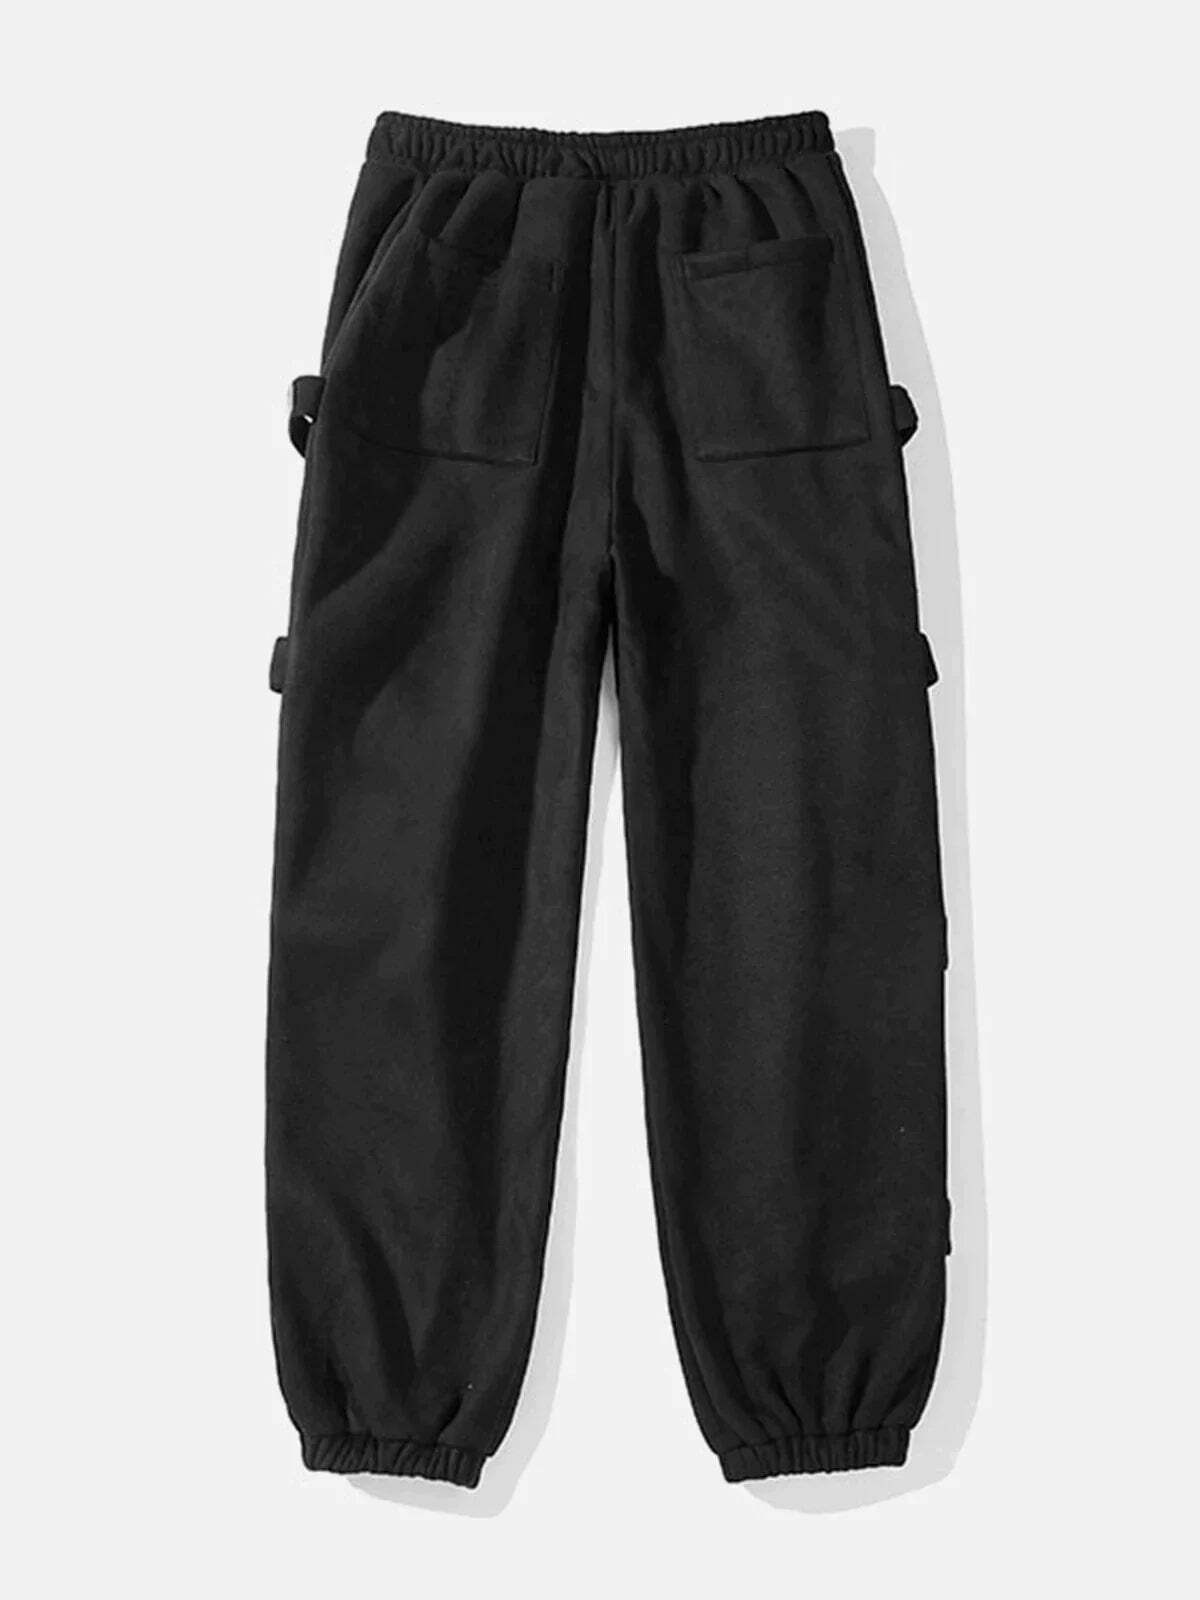 custom suede sweatpants labeled design & urban style 7678